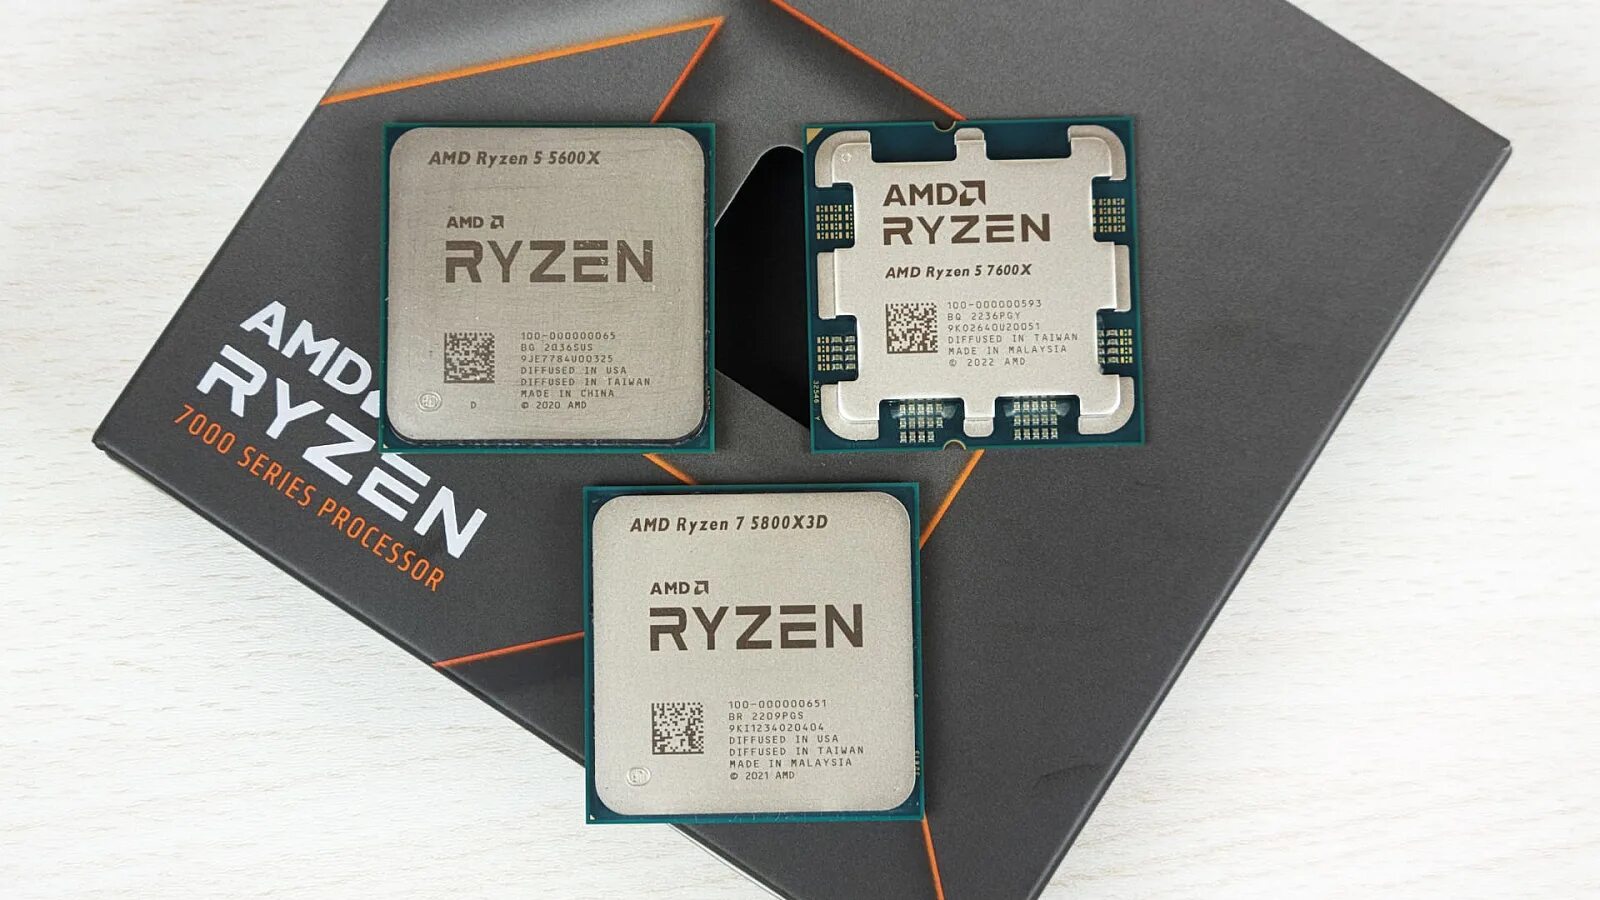 Amd ryzen 5 7600x am5. Ryzen 7600x. Ryzen 5 7600x. AMD Ryzen 5 7600x am5, 6 x 4700 МГЦ. AMD Ryzen 5 7600x 6-Core Processor 4.70 GHZ.